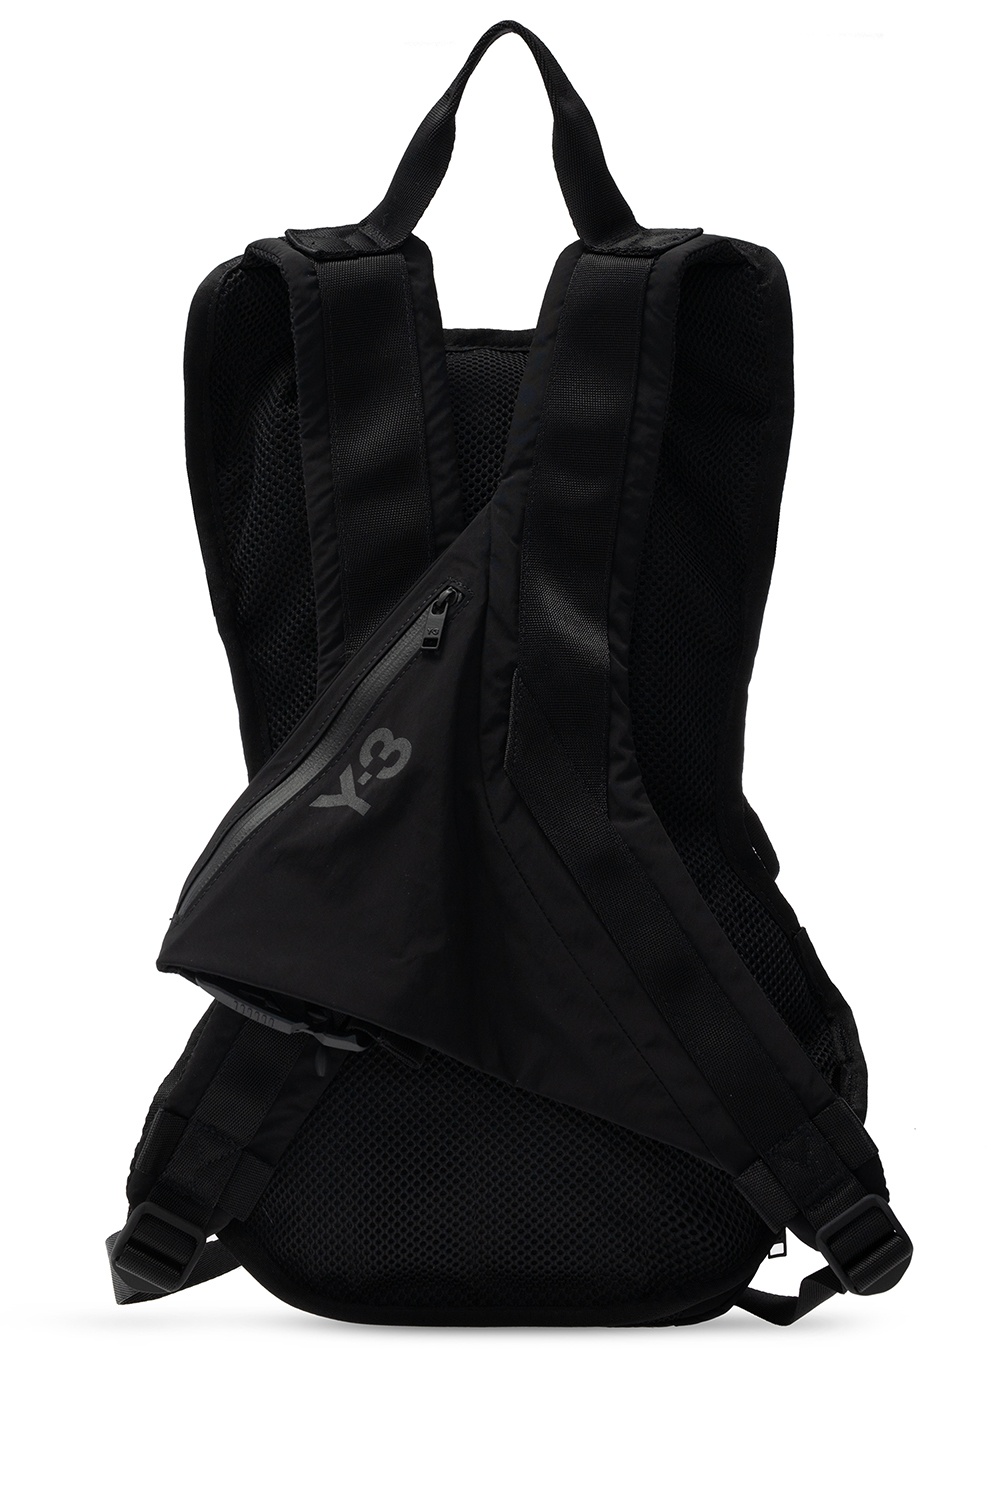 IetpShops GB - Backpack NATIONAL GEOGRAPHIC Backpack N14112.06 Black -  Black Reflective backpack with logo Gürteltasche LIU JO Belt Bag NA2037  T6438 Jacq